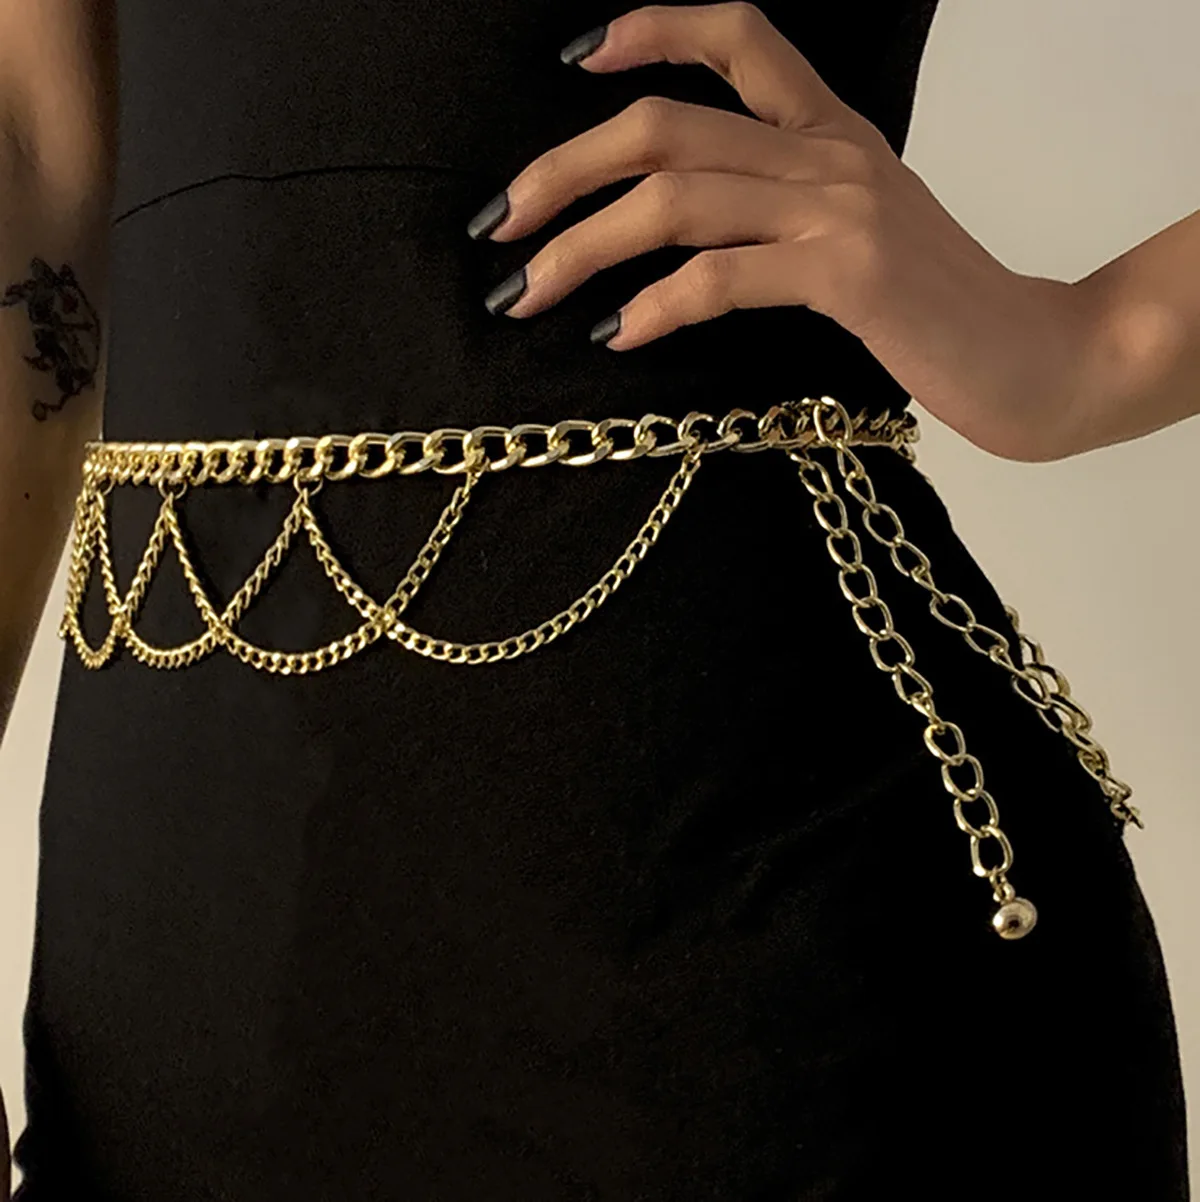 Multilayer Chain Belts for Women Metal Waist Chain Body Summer Beach Jewelry for Women and Girls Tassel Bkini Body Chain Belt